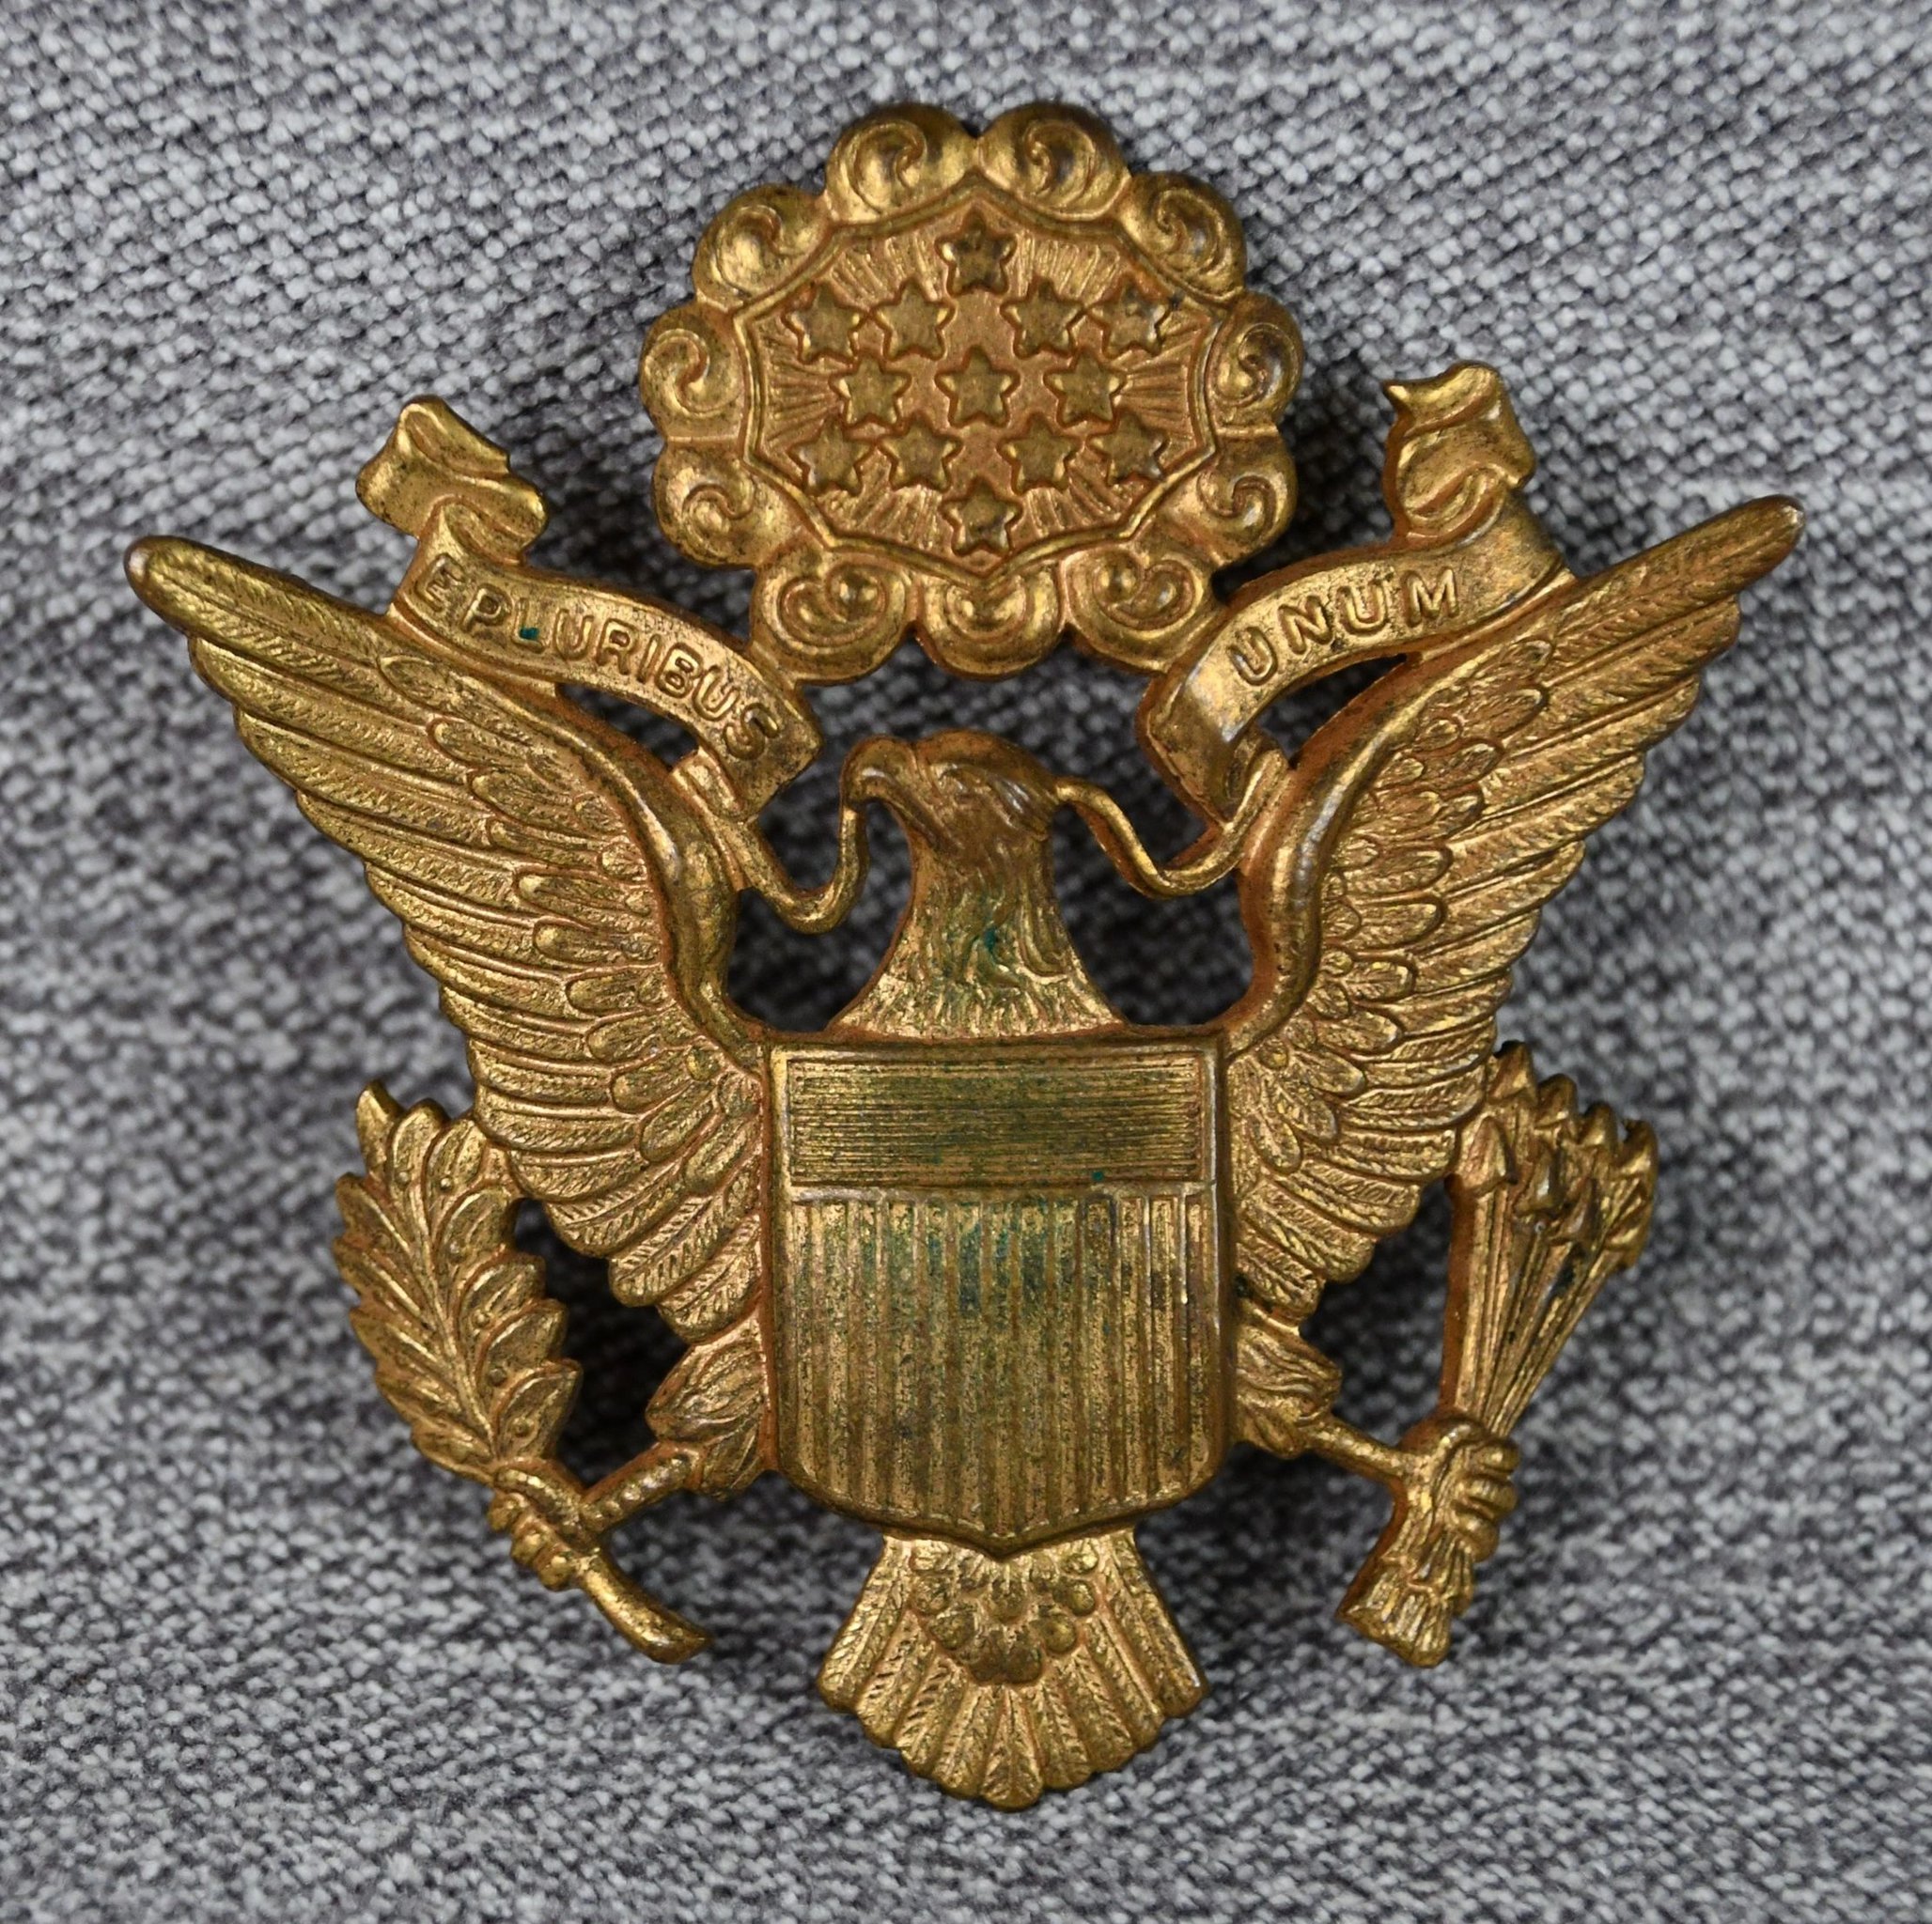 US Army Officer Visor Cap Eagle